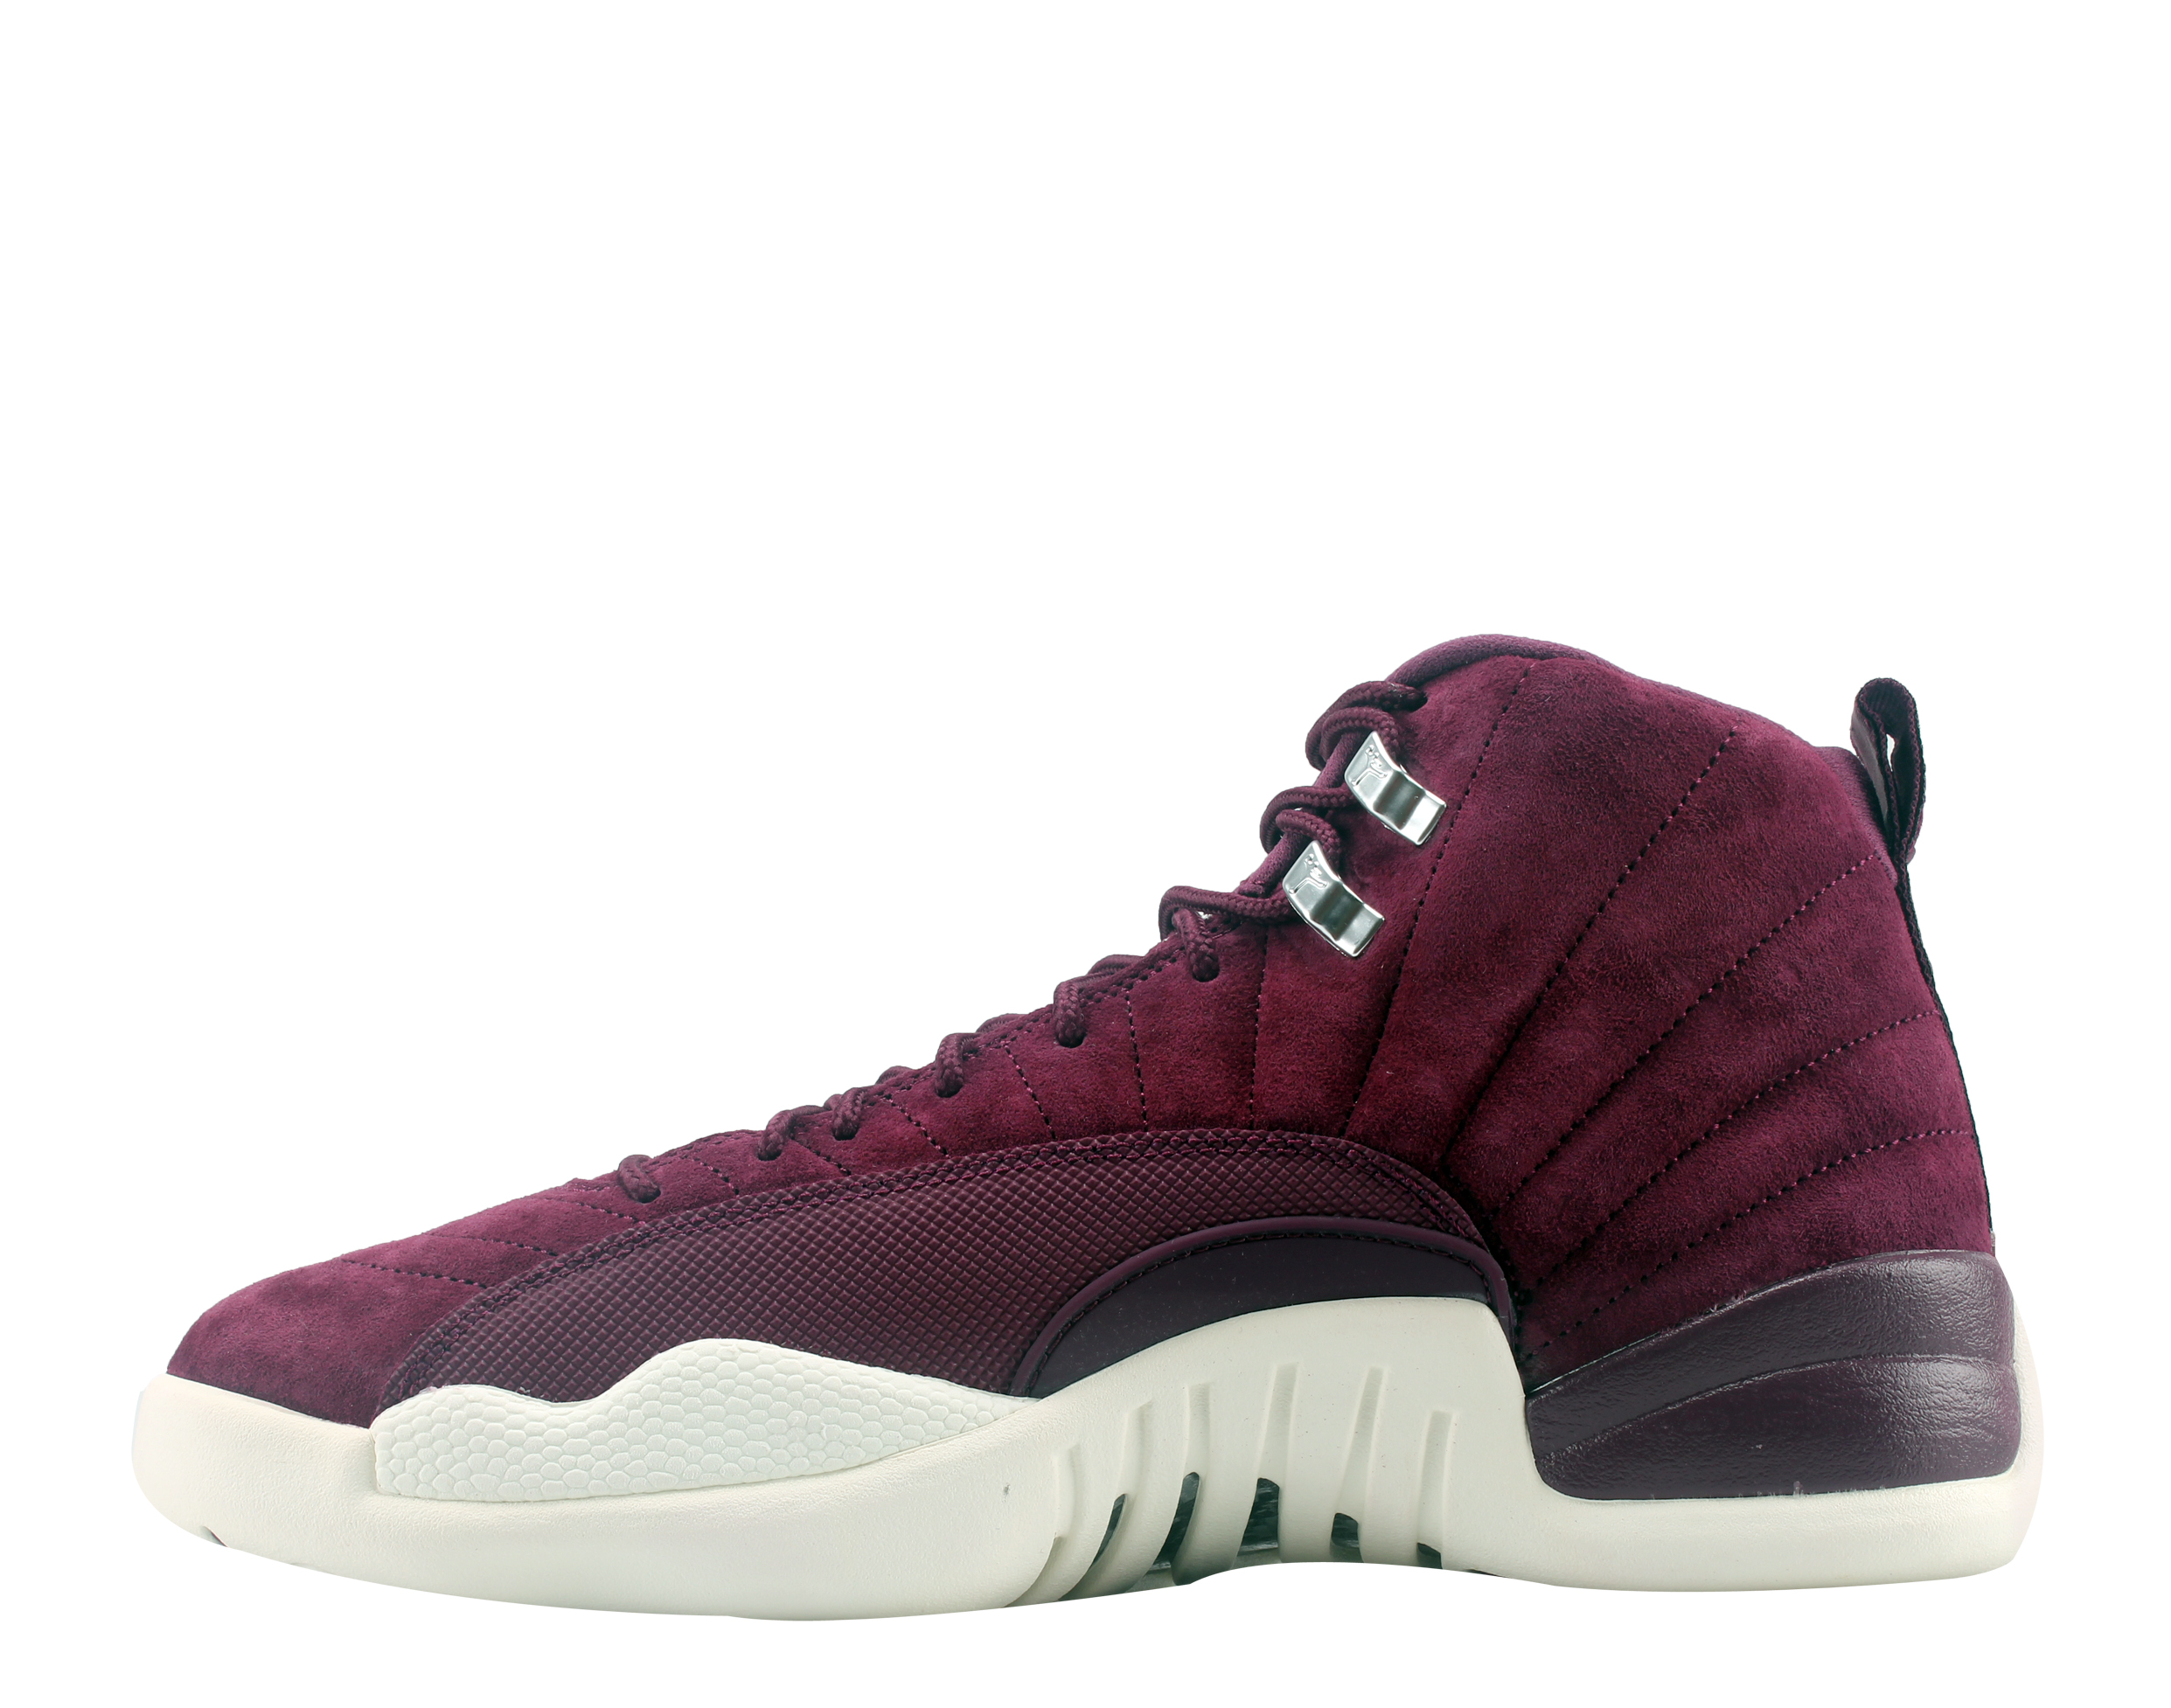 Nike Air Jordan 12 Retro Men's Basketball Shoes Size 9 - image 3 of 6